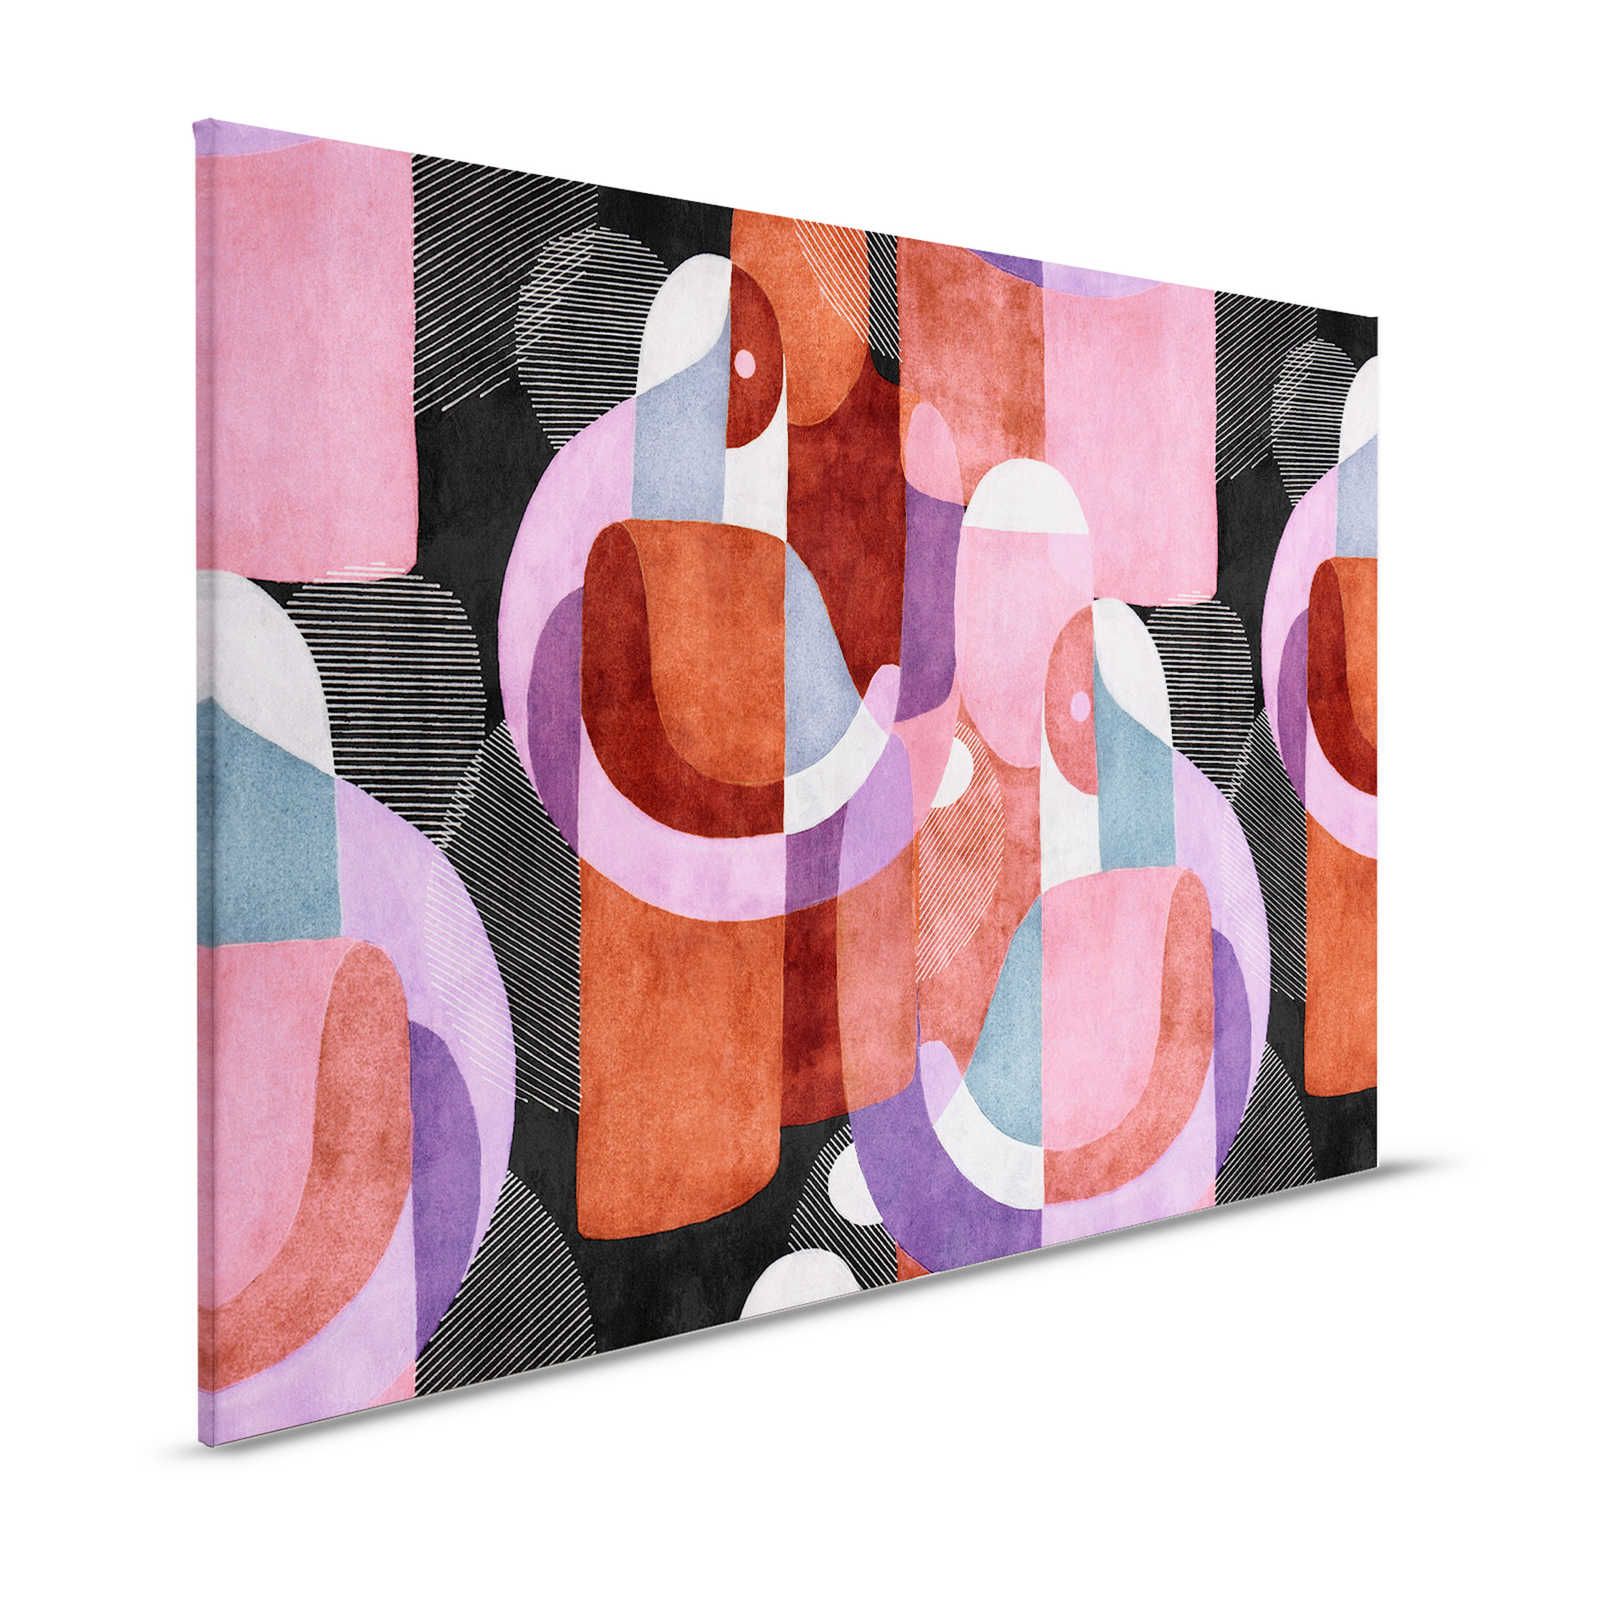 Meeting Place 2 - Canvas schilderij abstract etno design in zwart & roze - 1,20 m x 0,80 m
